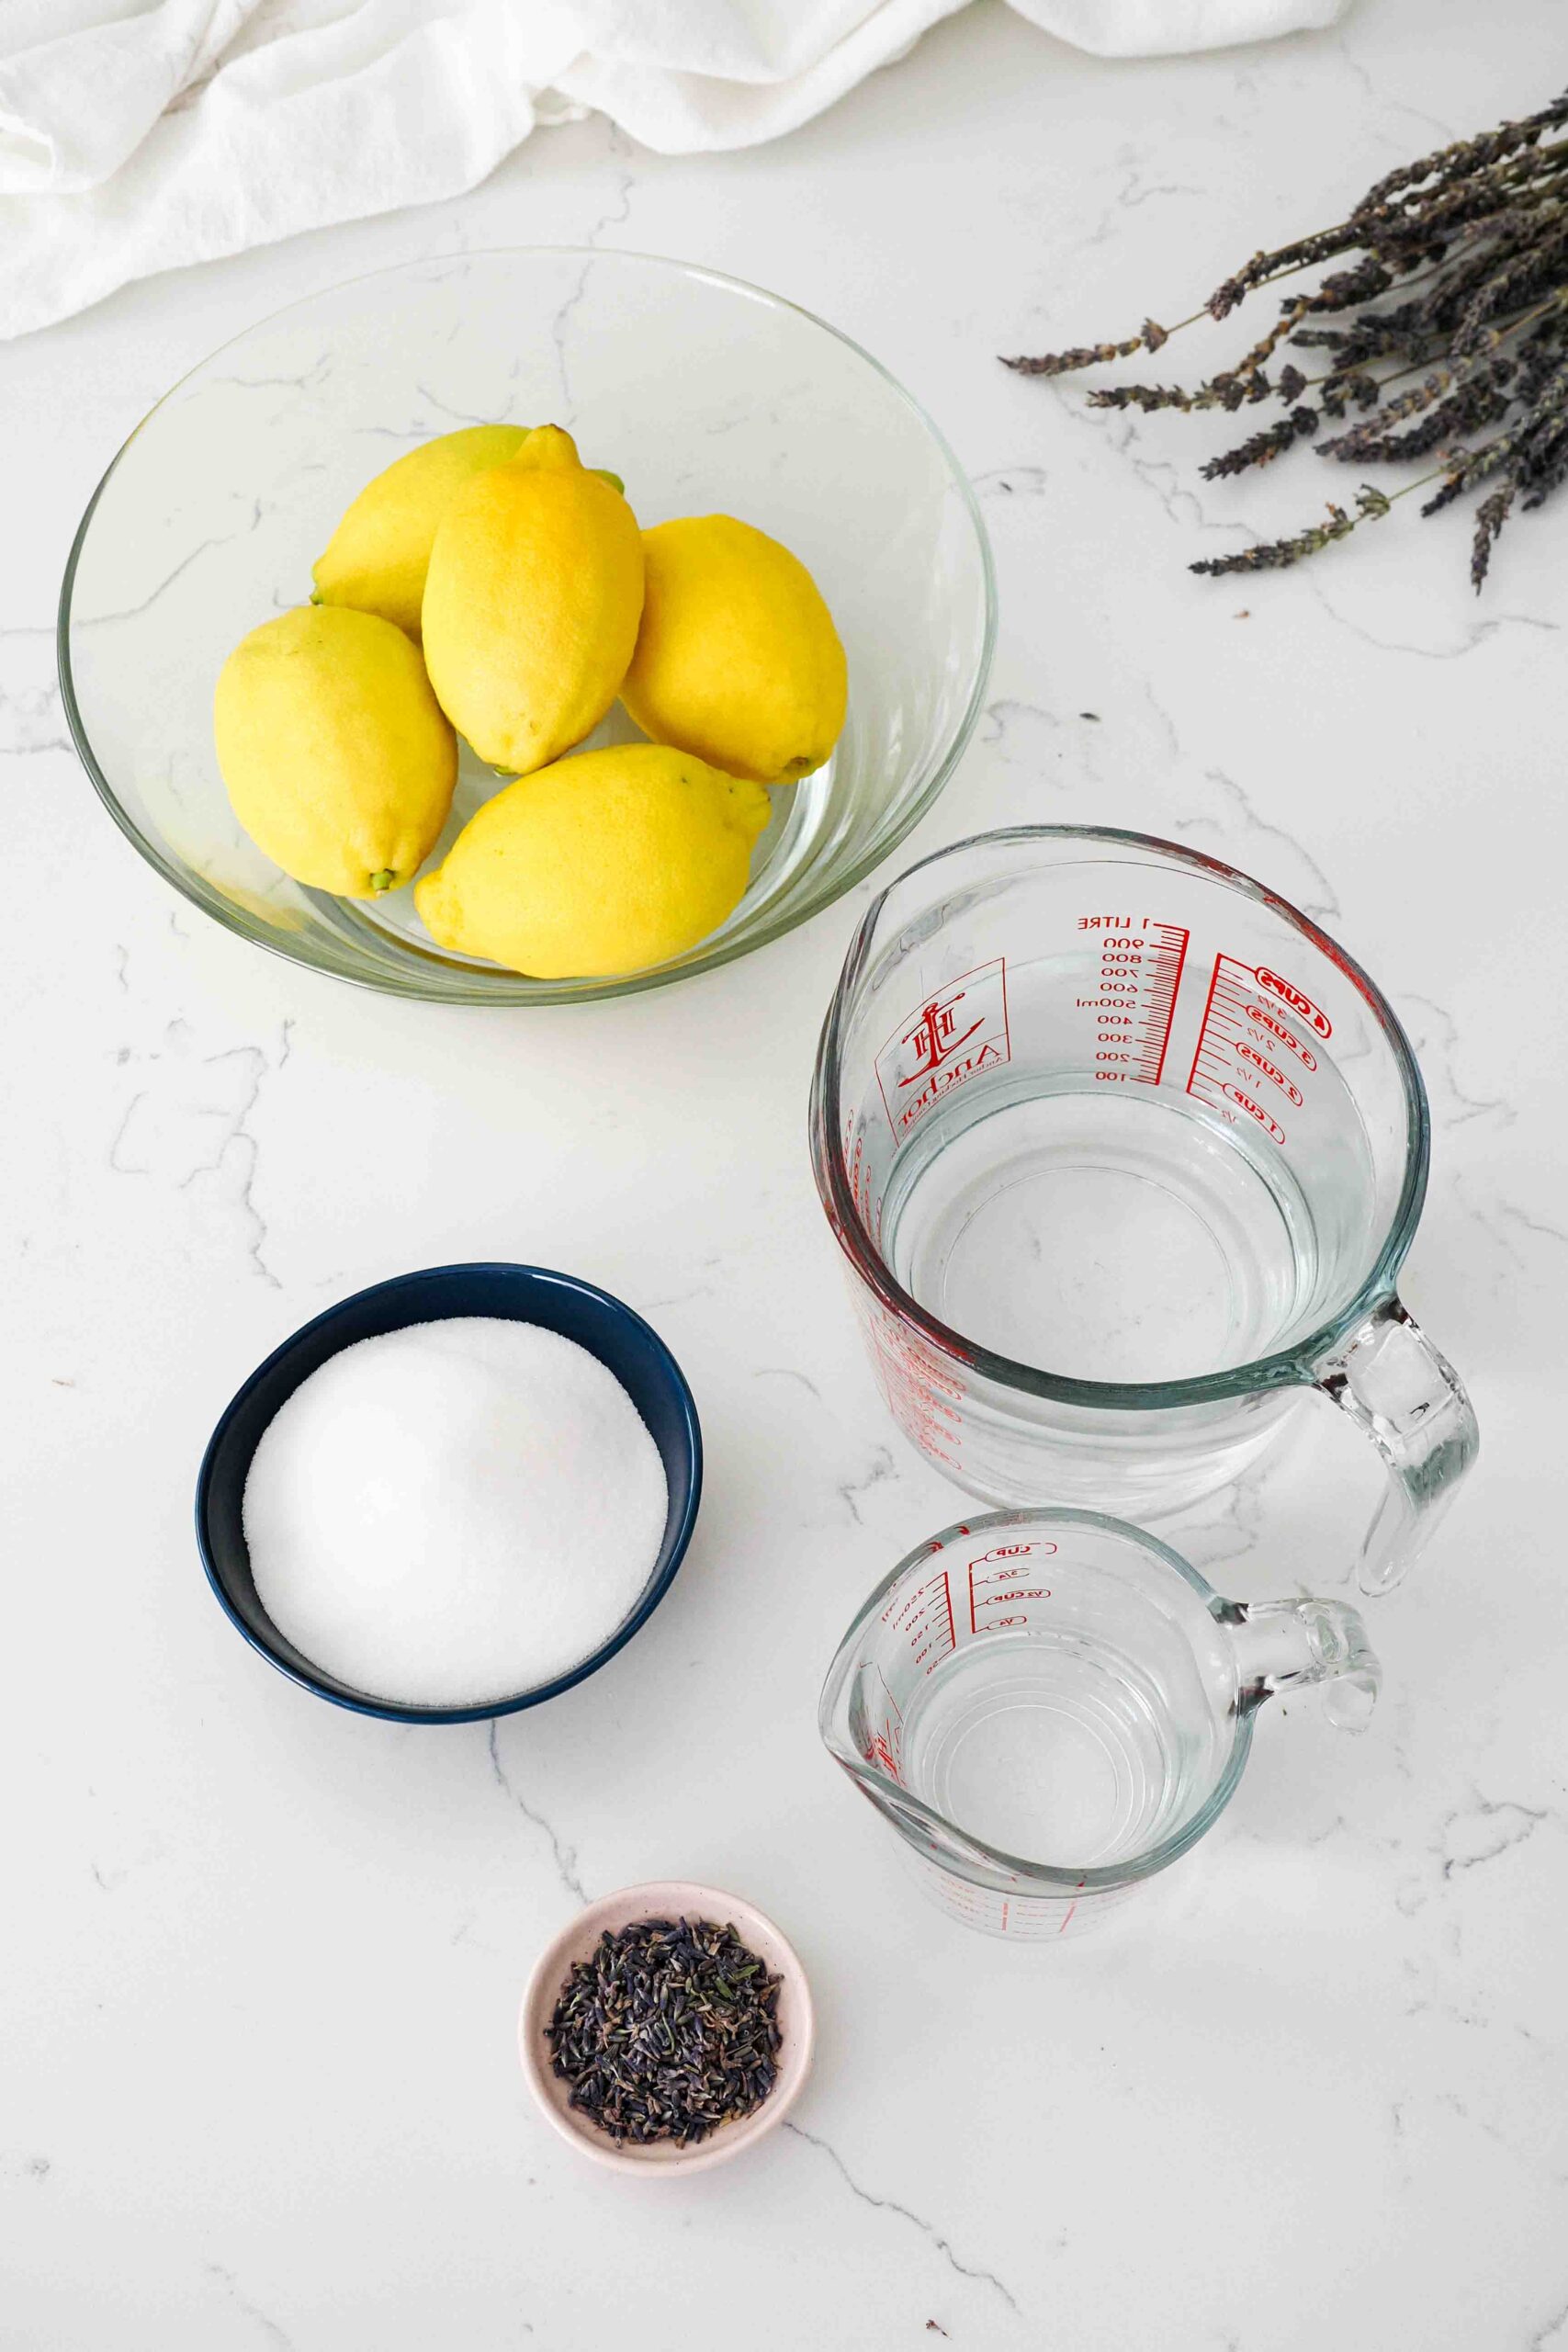 Ingredients for lavender lemonade on a countertop.